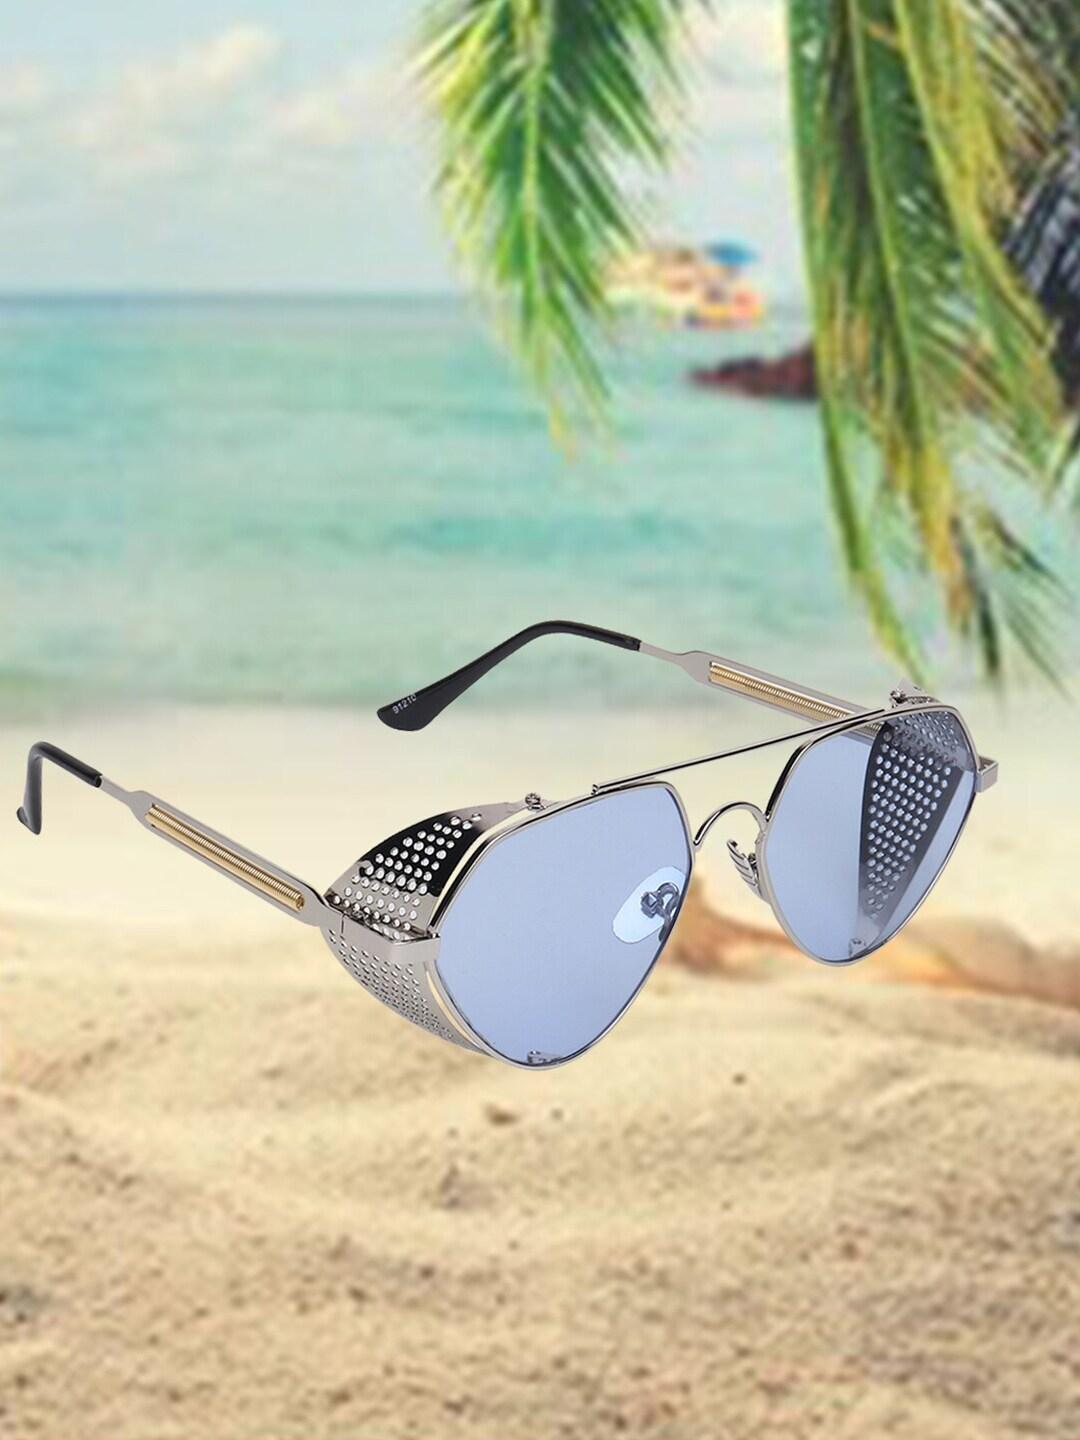 celebrity sunglasses lens & aviator sunglasses with uv protected lens